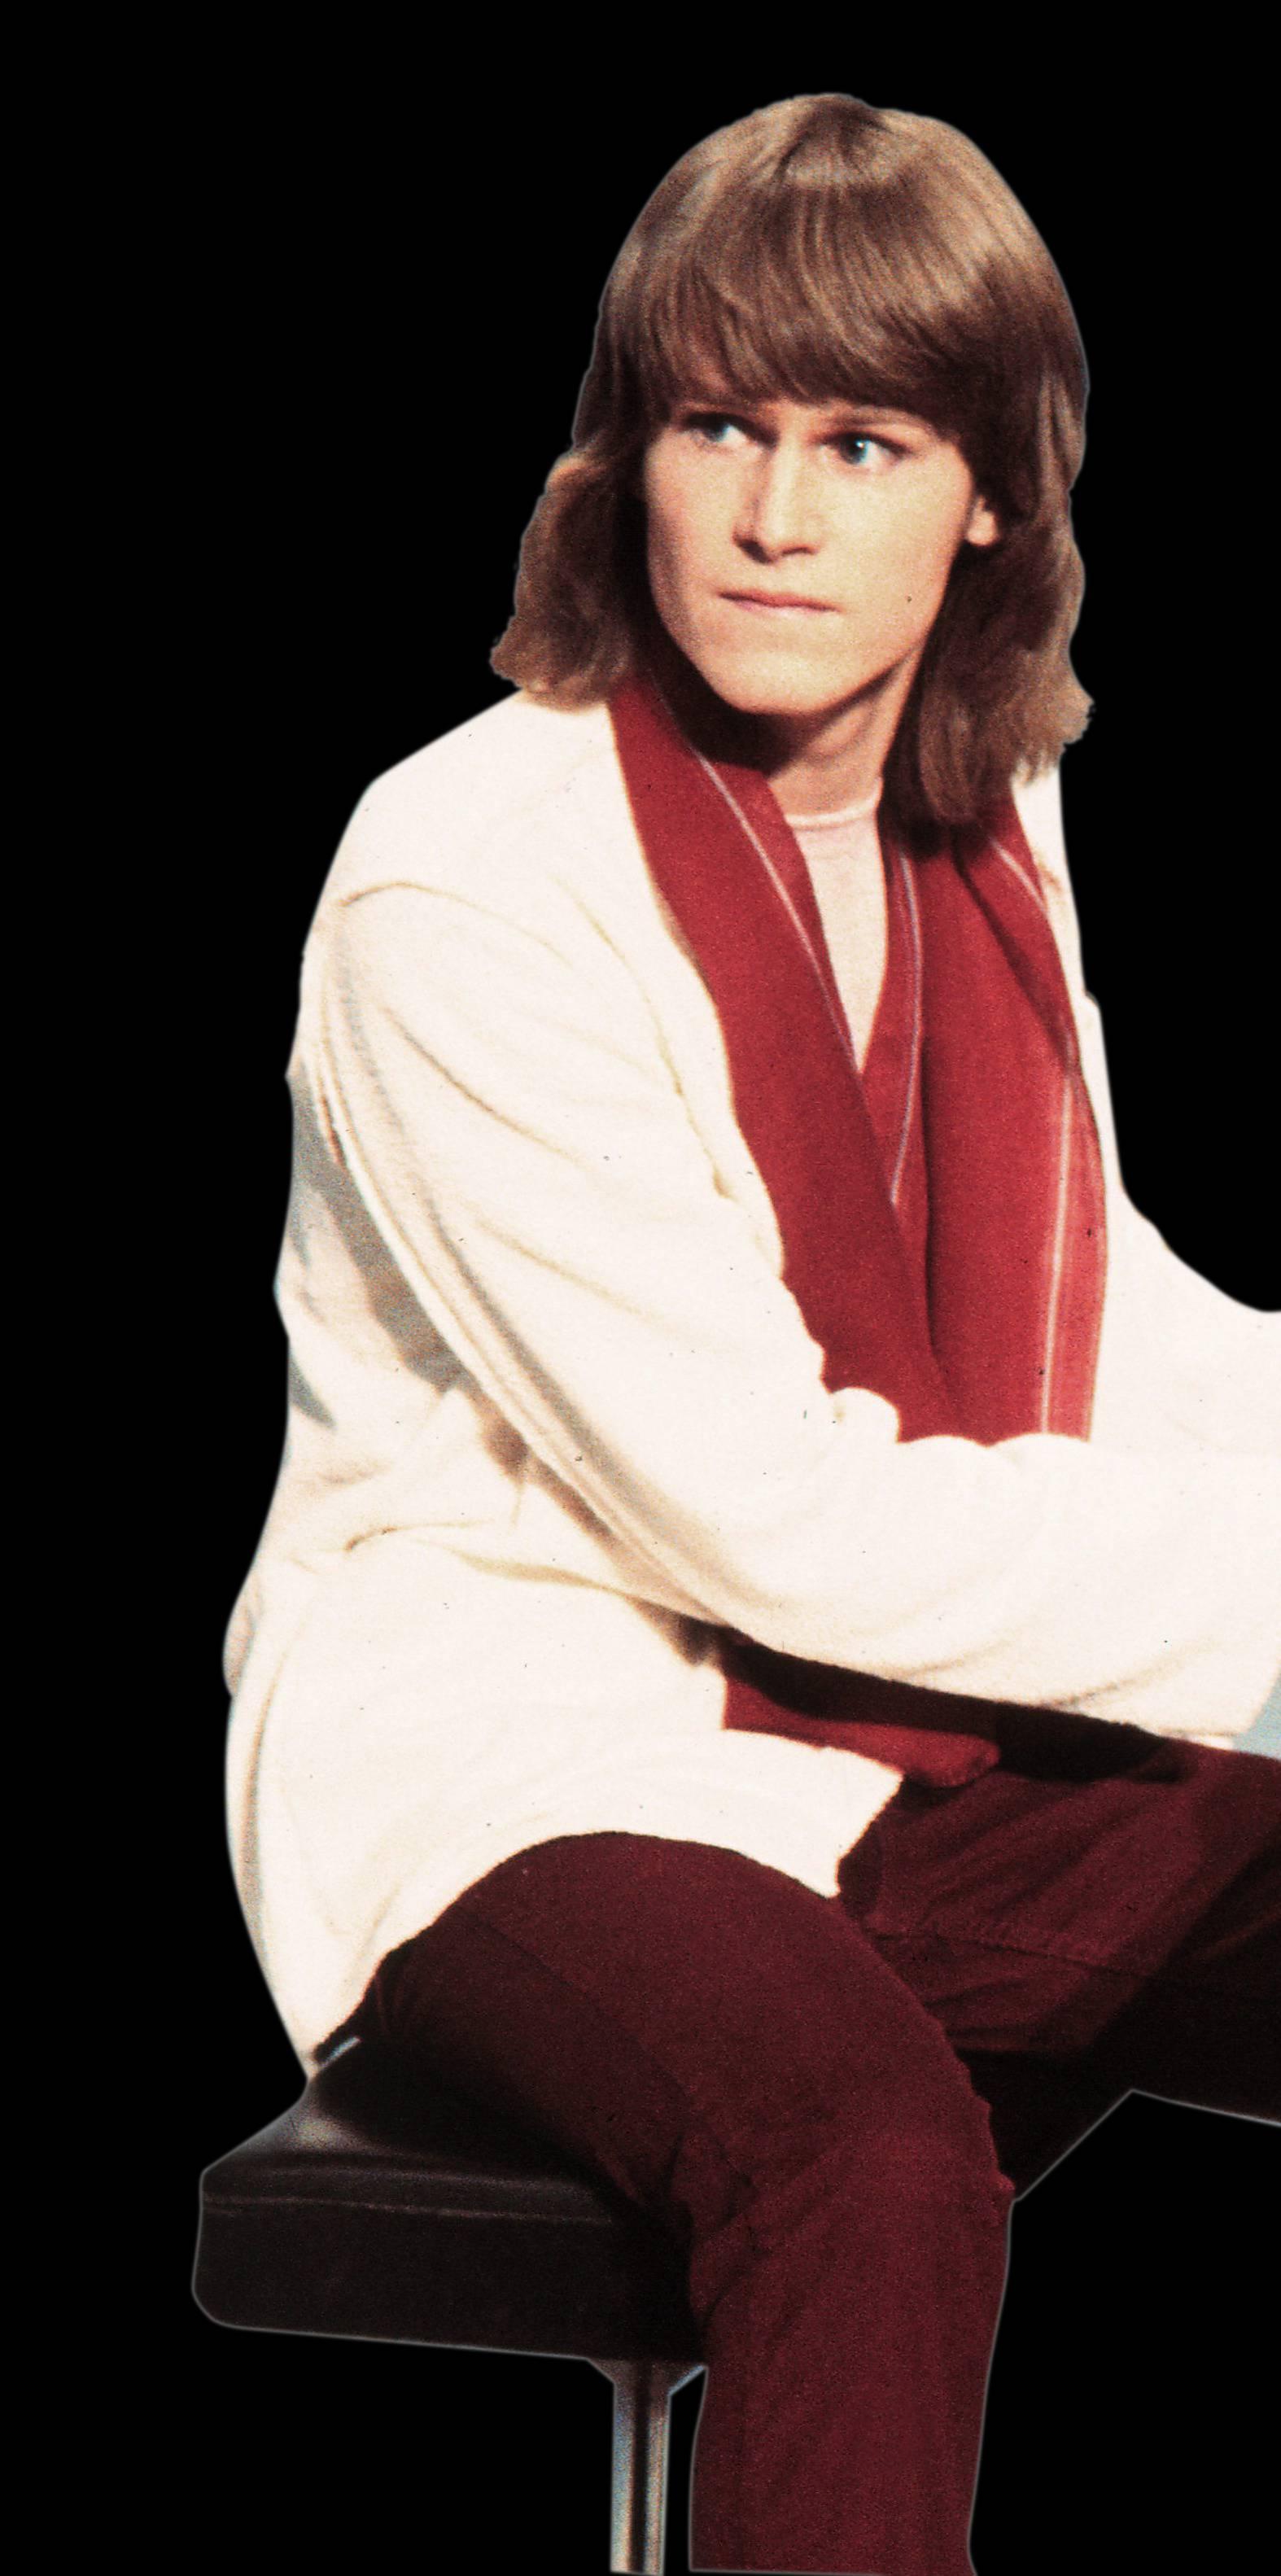 1979 vann Ted Gärdestad Melodifestivalen med låten ”Satelit”.